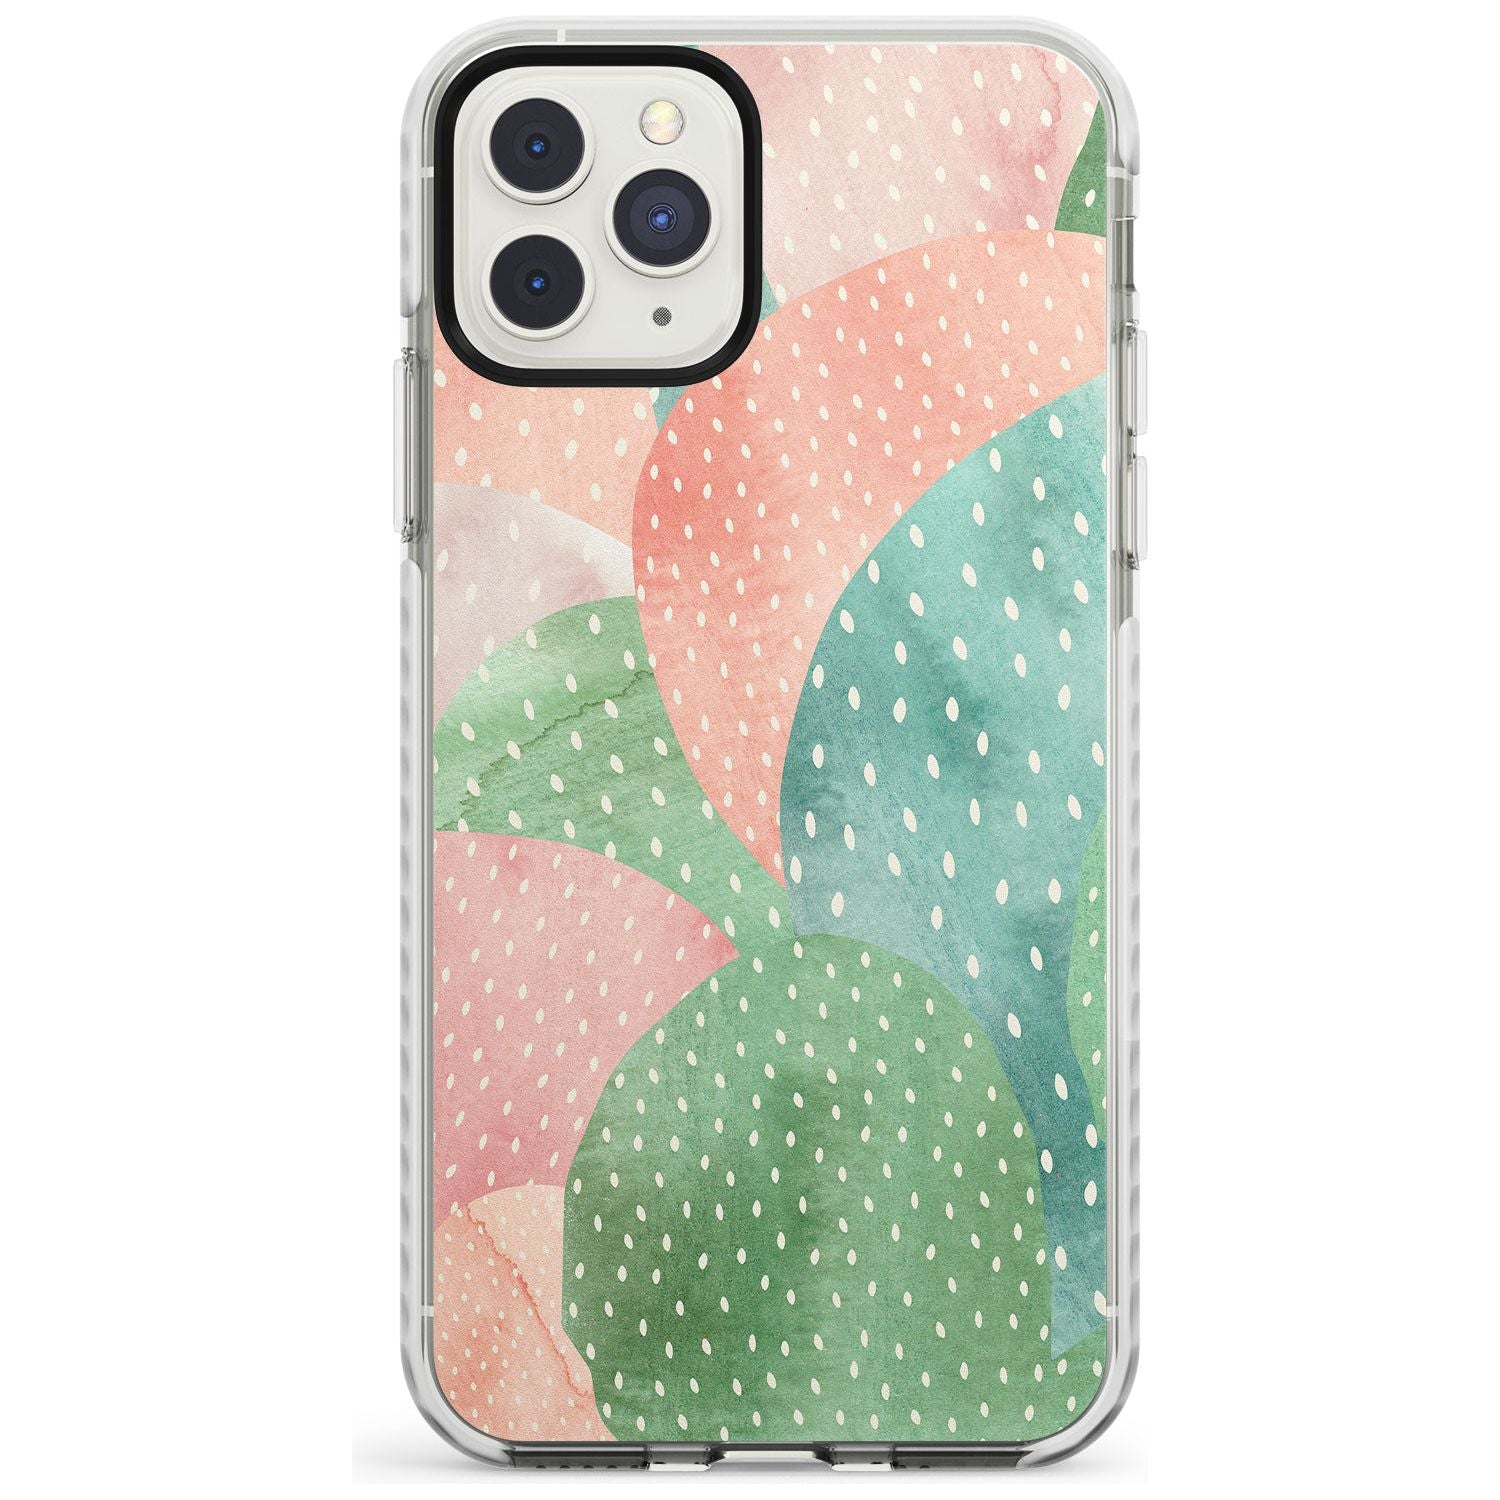 Colourful Close-Up Cacti Design Impact Phone Case for iPhone 11 Pro Max